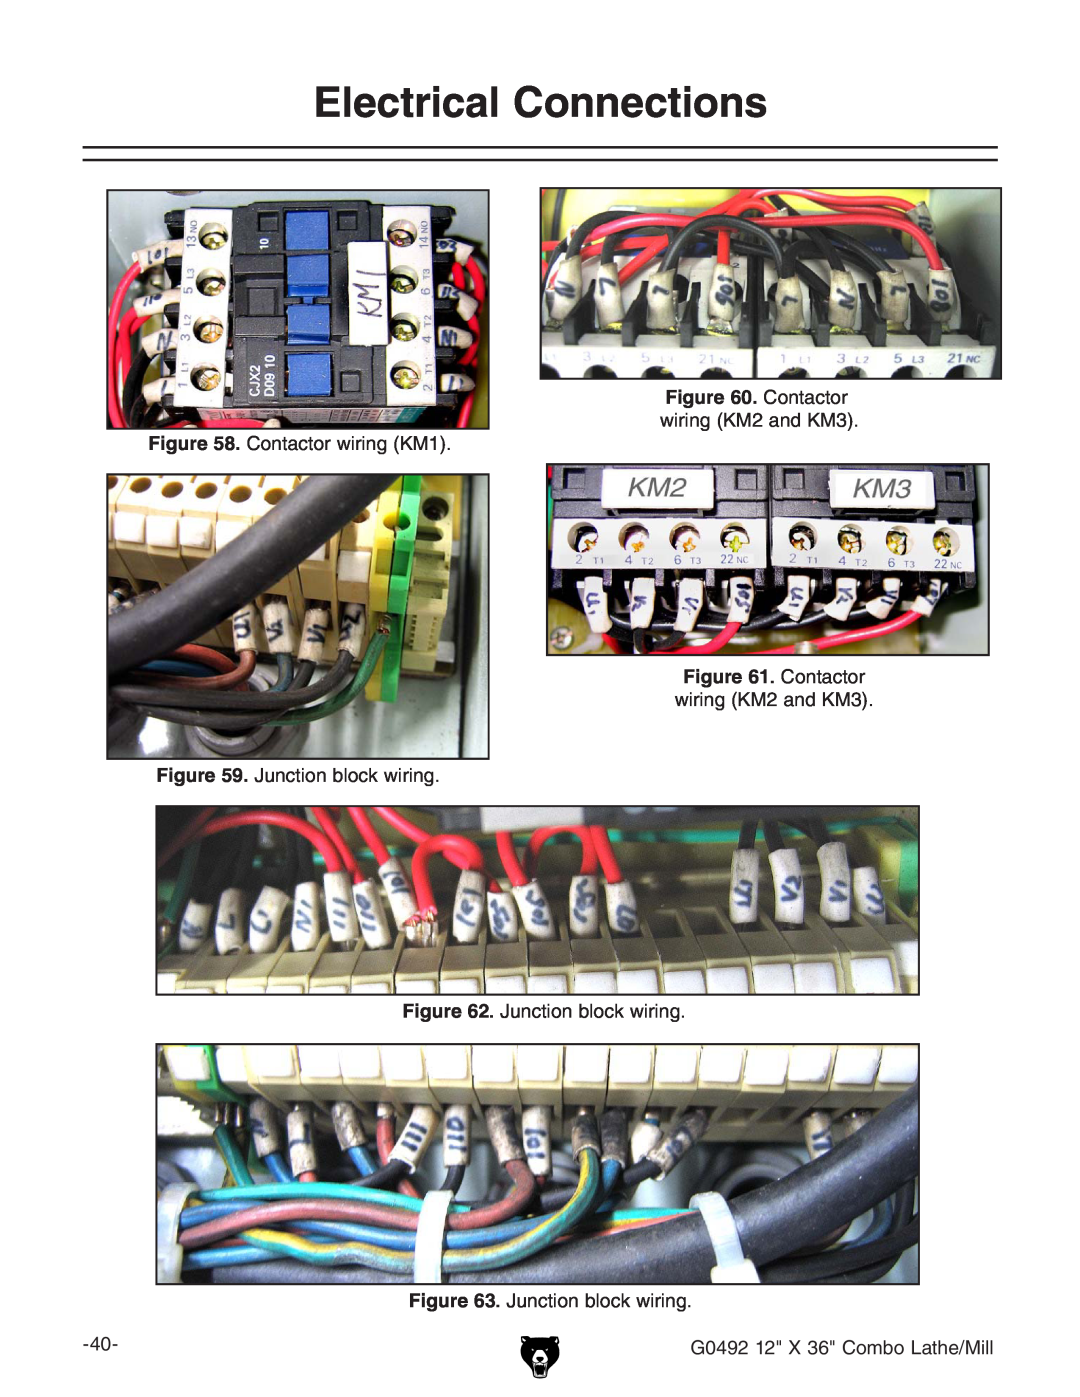 Grizzly G0492 manual Electrical Connections, 8dciVXidglgc\@B&# . ?jcXidcWadX`lgc\#, 8dciVXidg lgc\@BVcY@B# 